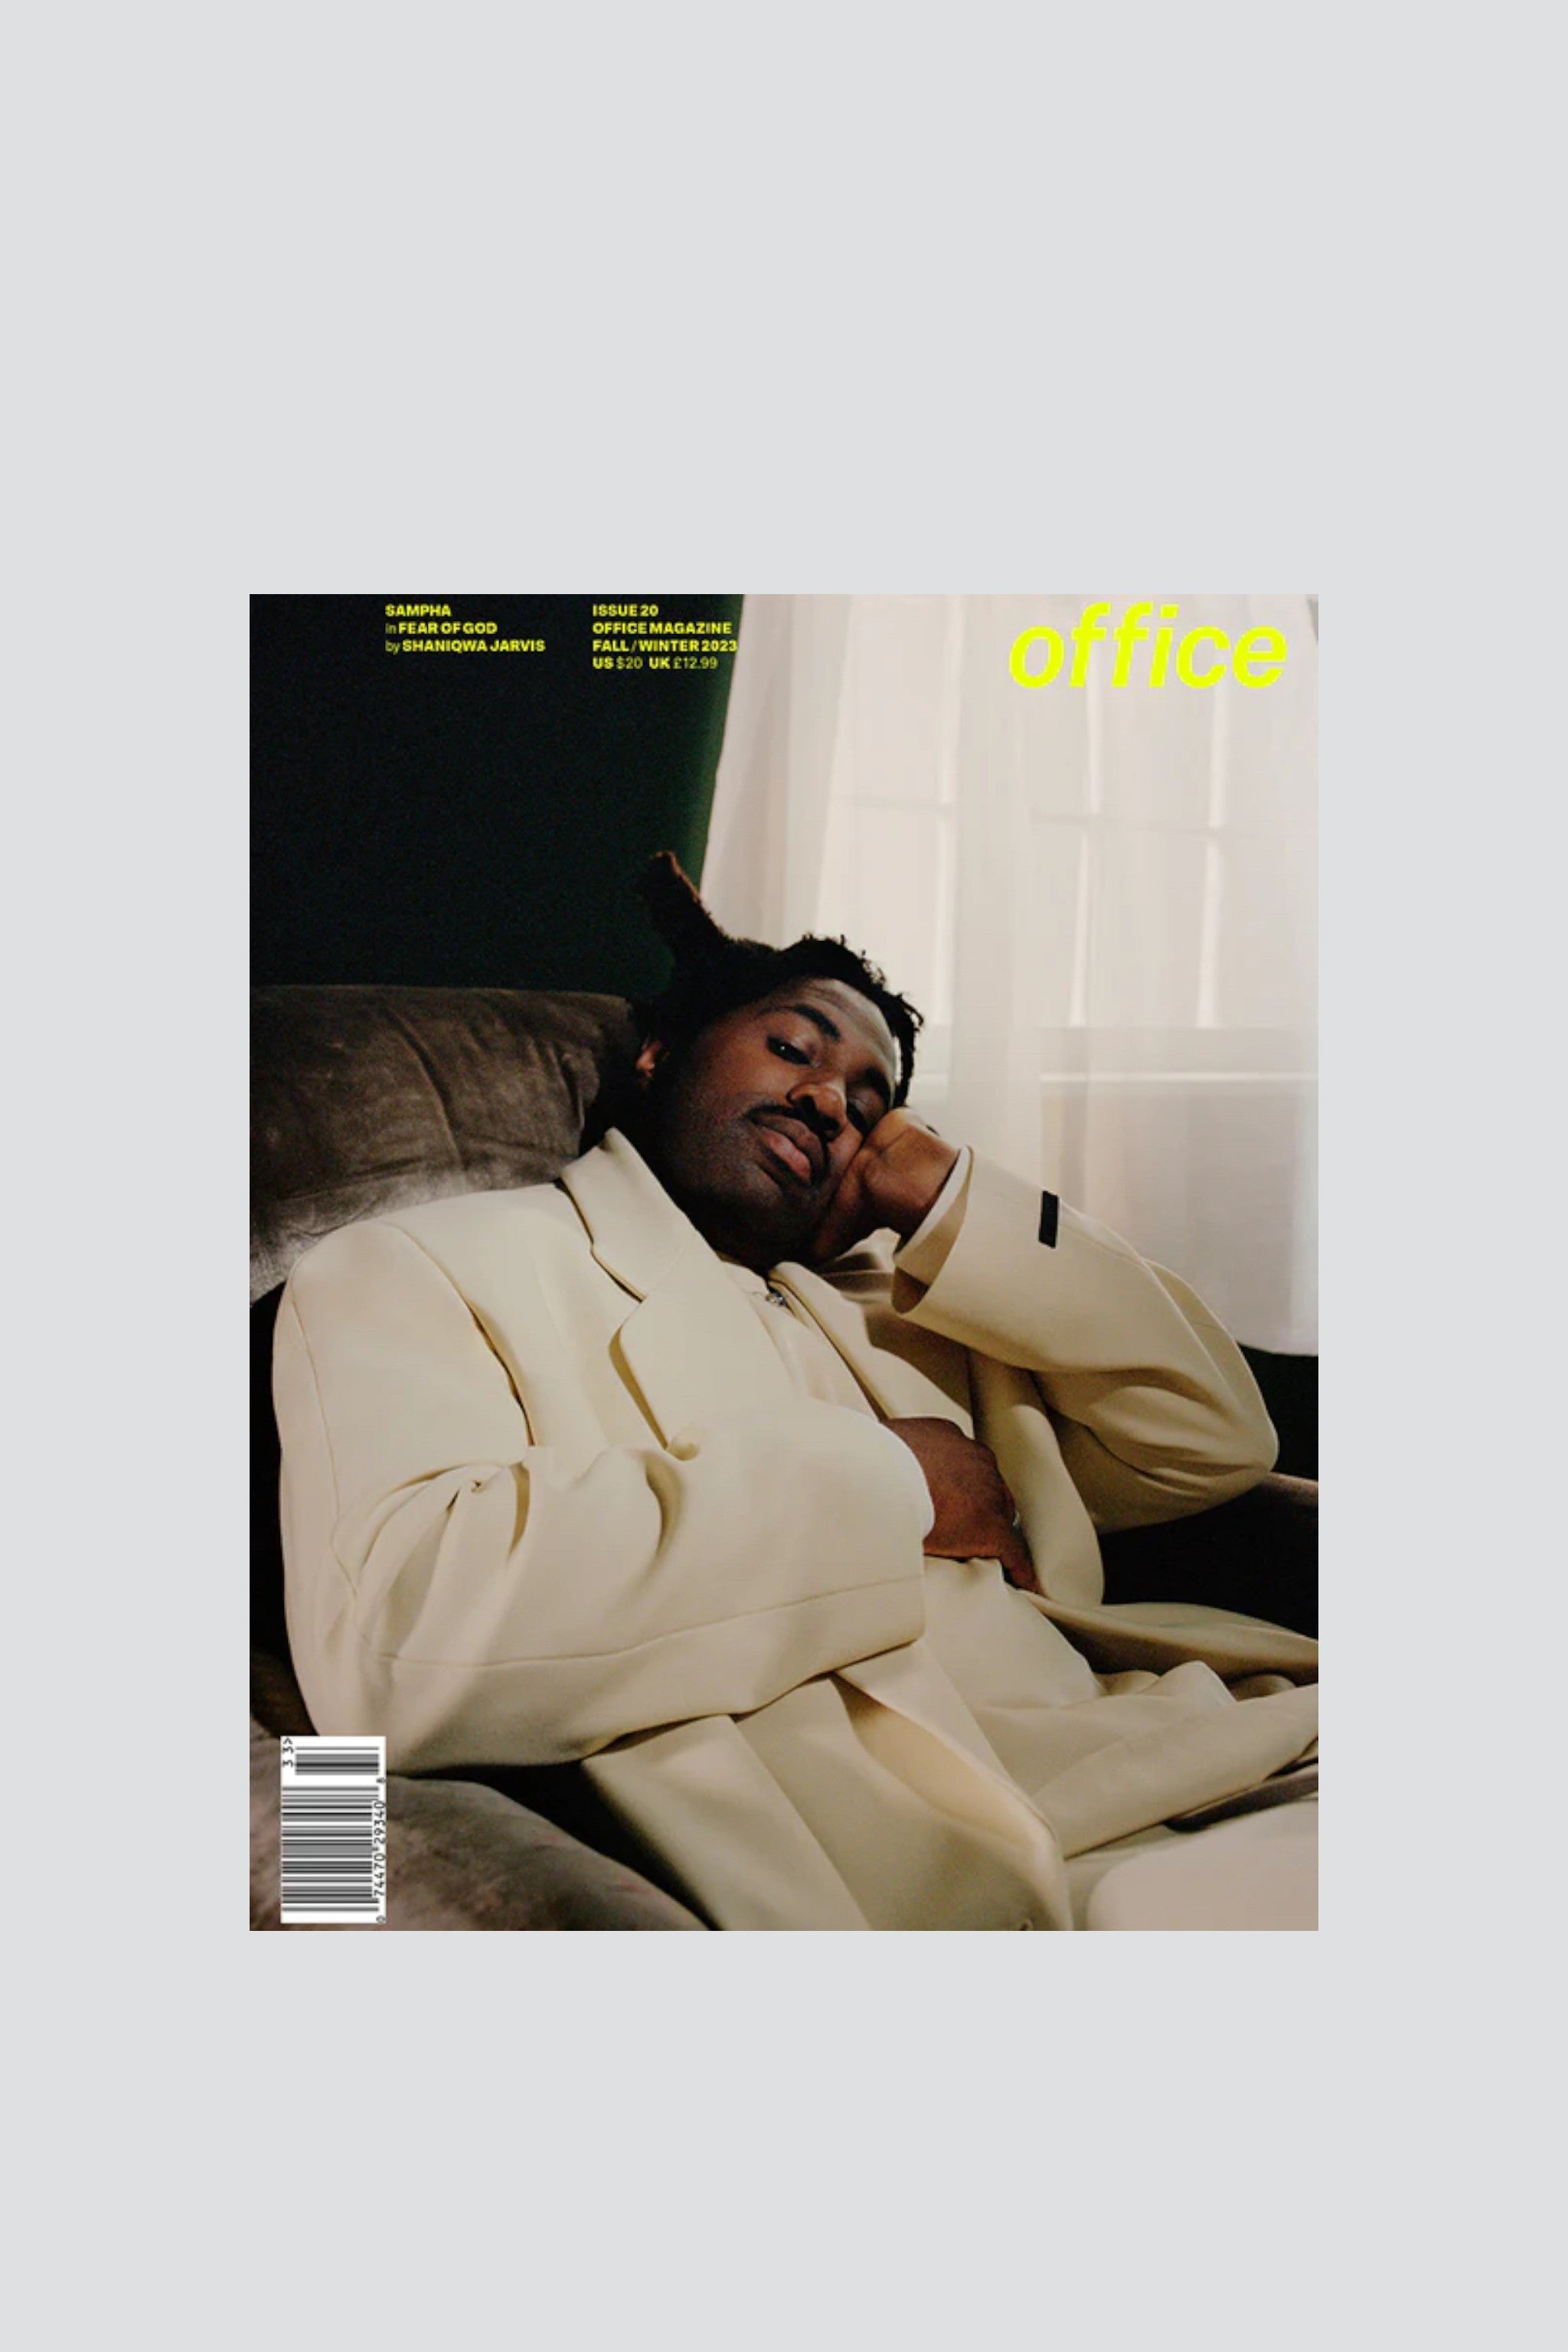 Office Magazine - Issue 20